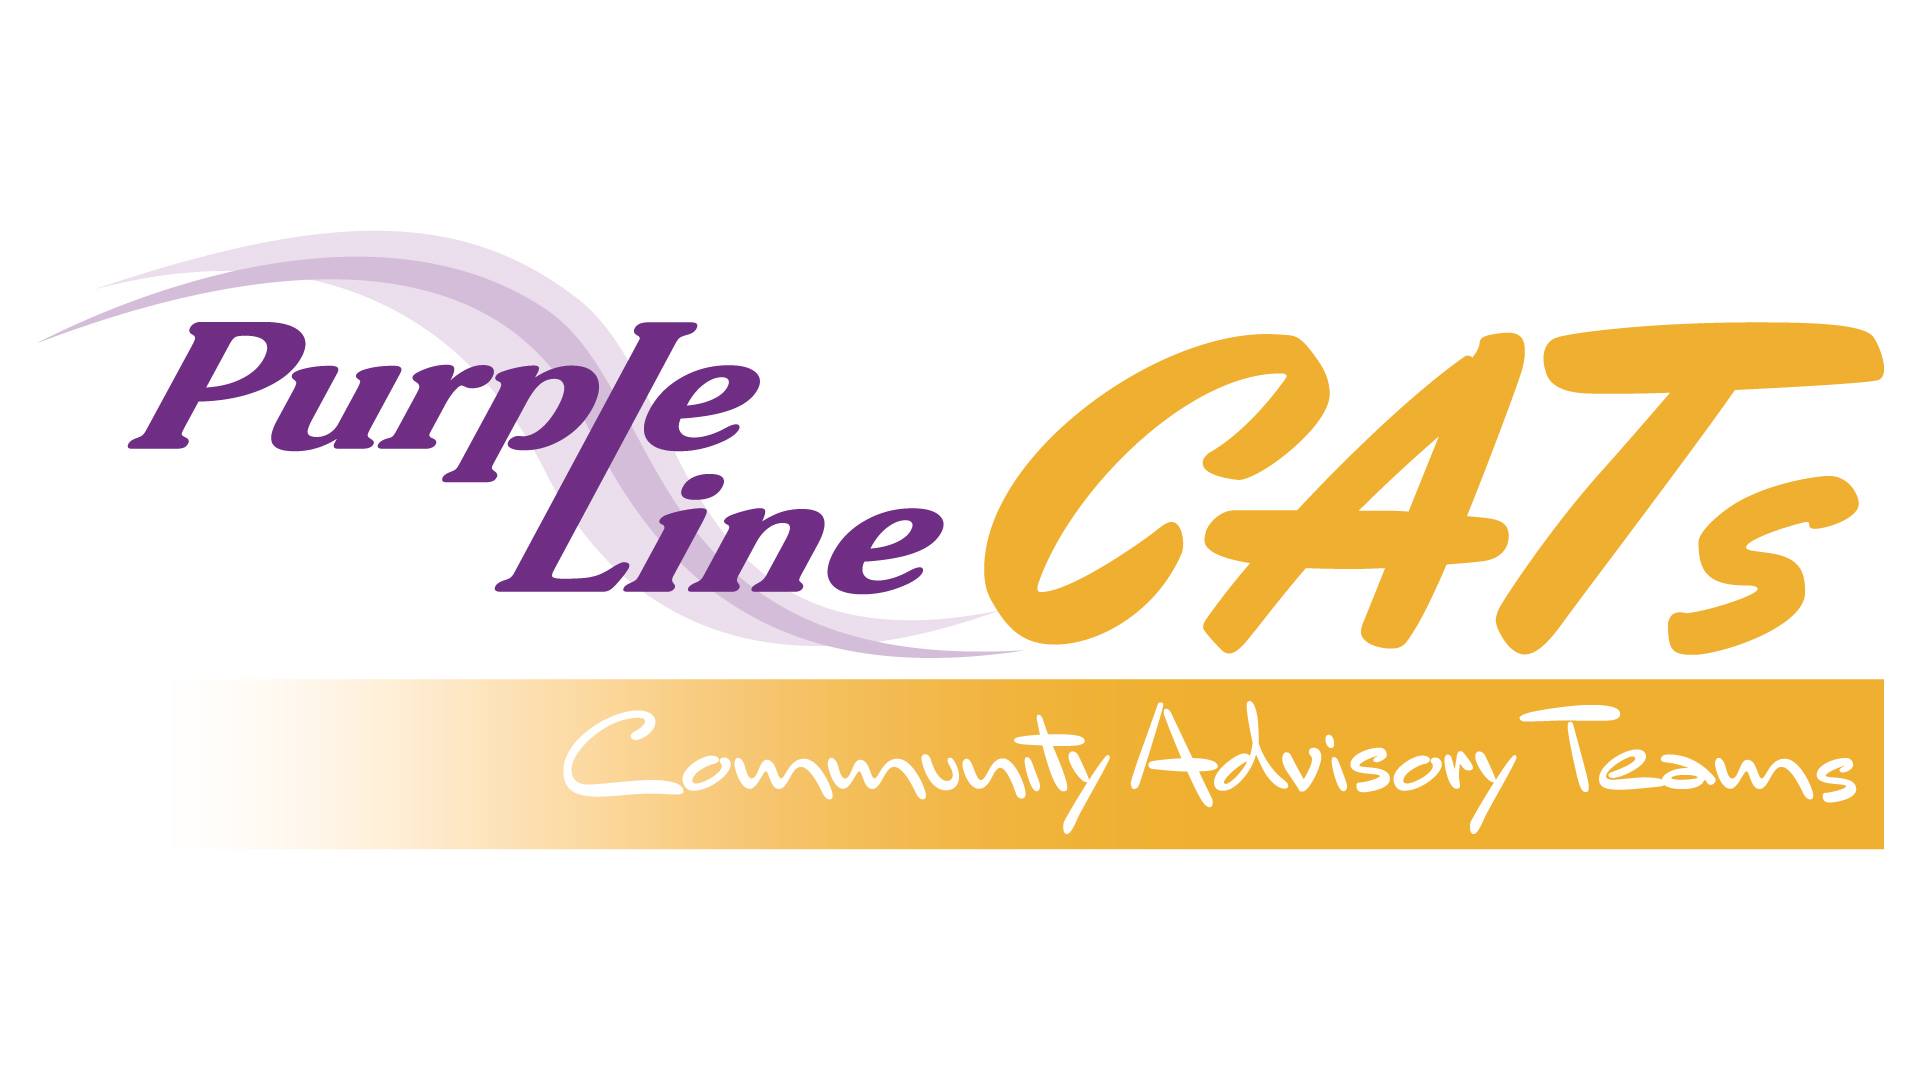 Purple Line Community Advisory Teams (CATs)